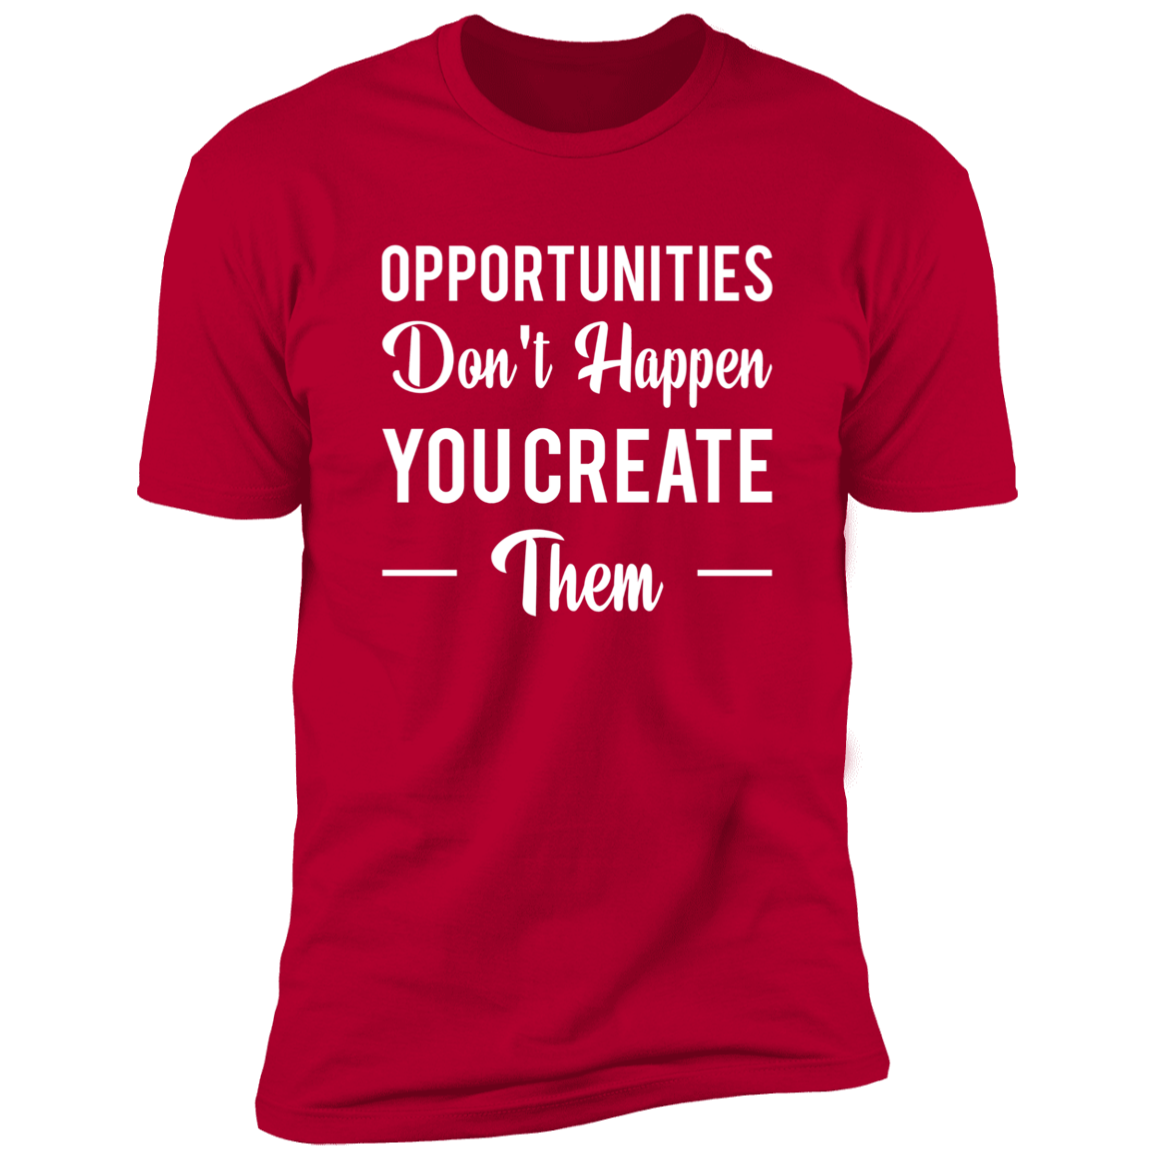 Create Your Own Opportunities - Z61x Premium Short Sleeve Men's T-Shirt